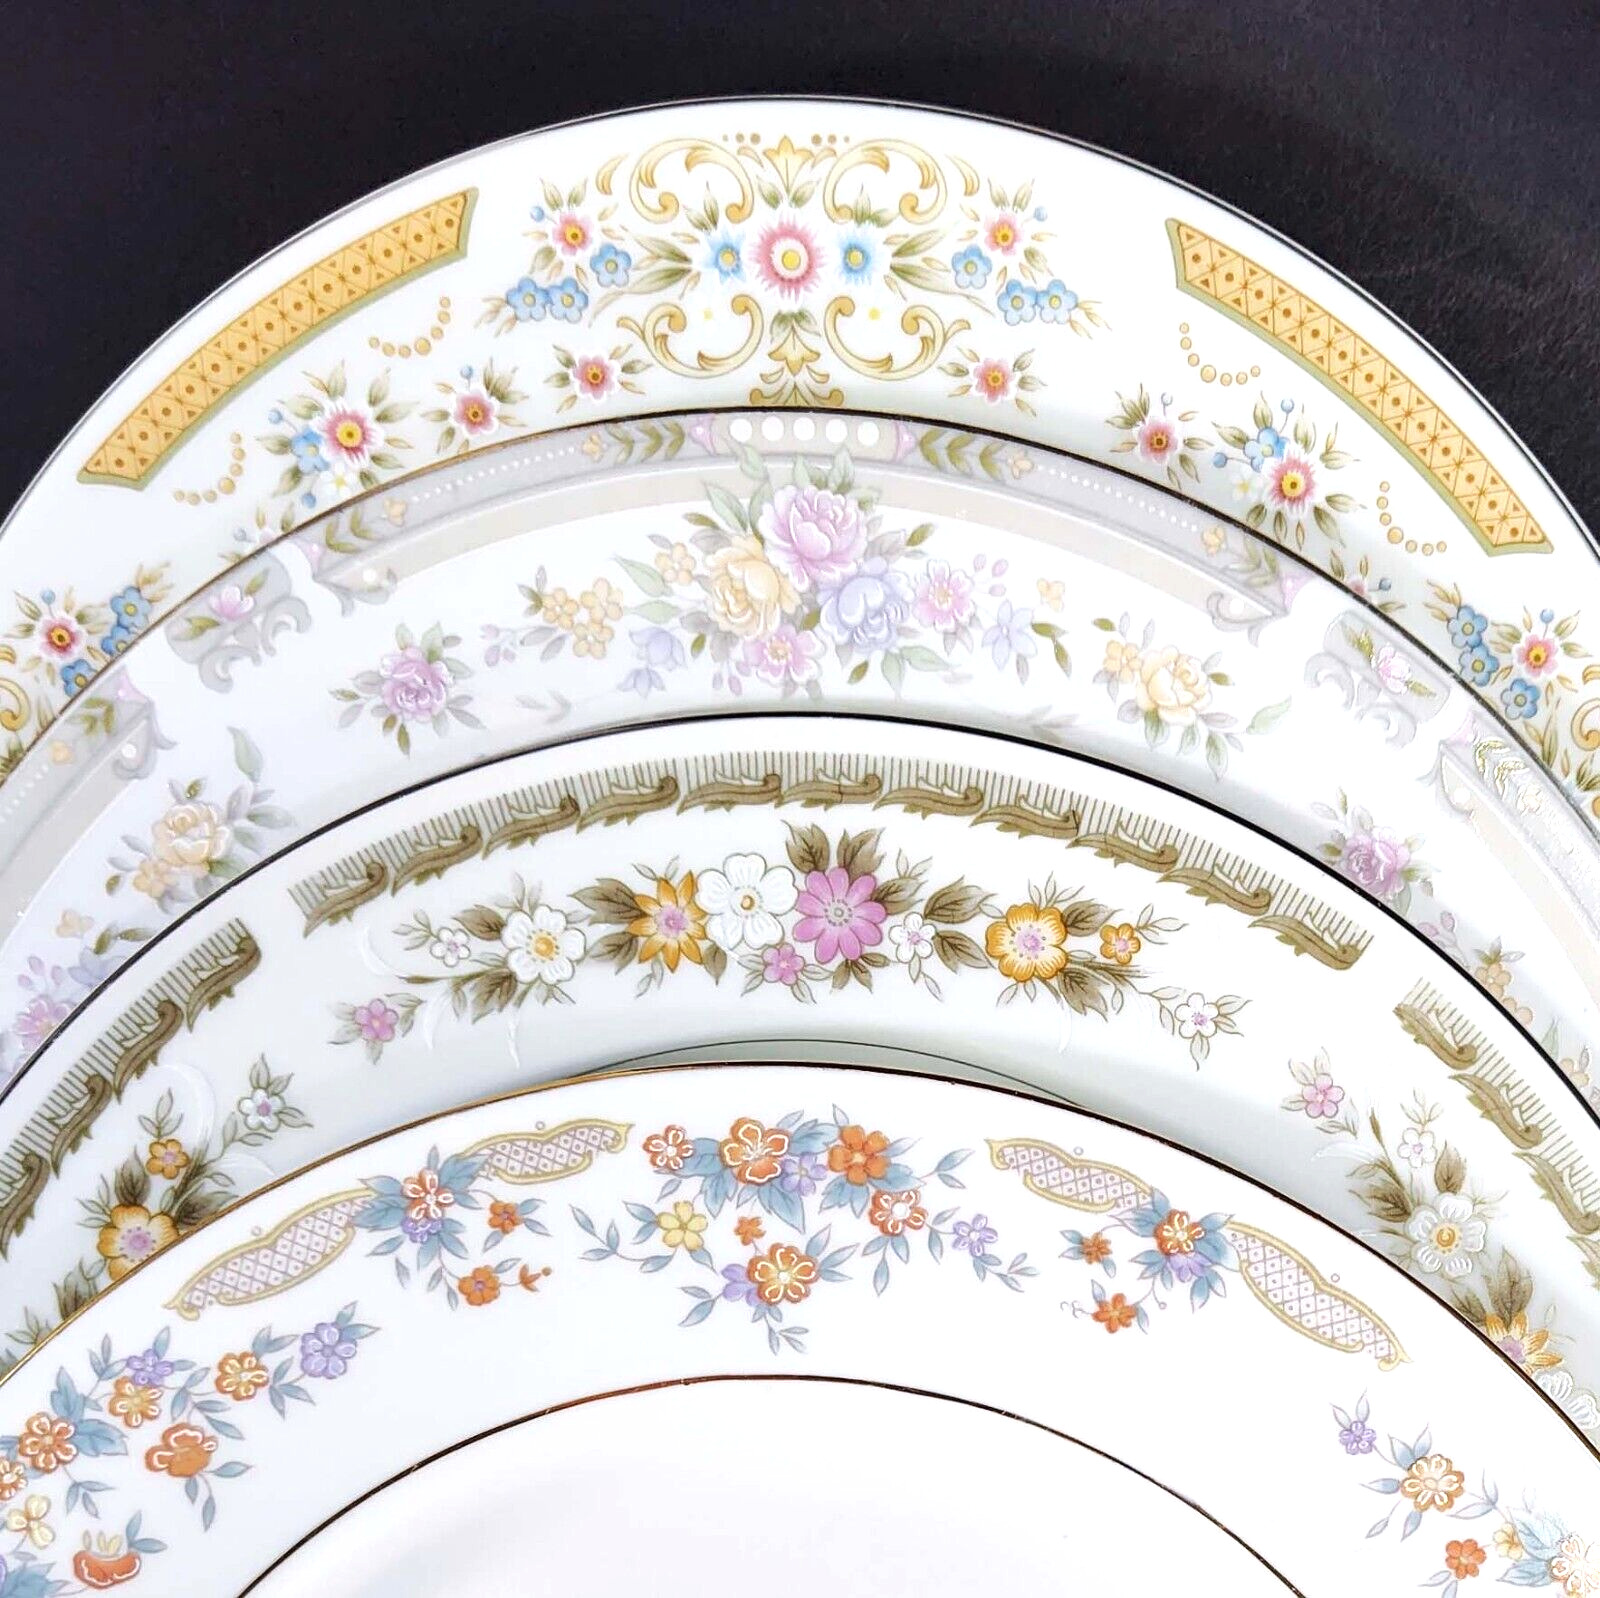 Mismatched Dinner Plates Vintage Floral Rim Plates Mix and Match Set of 4